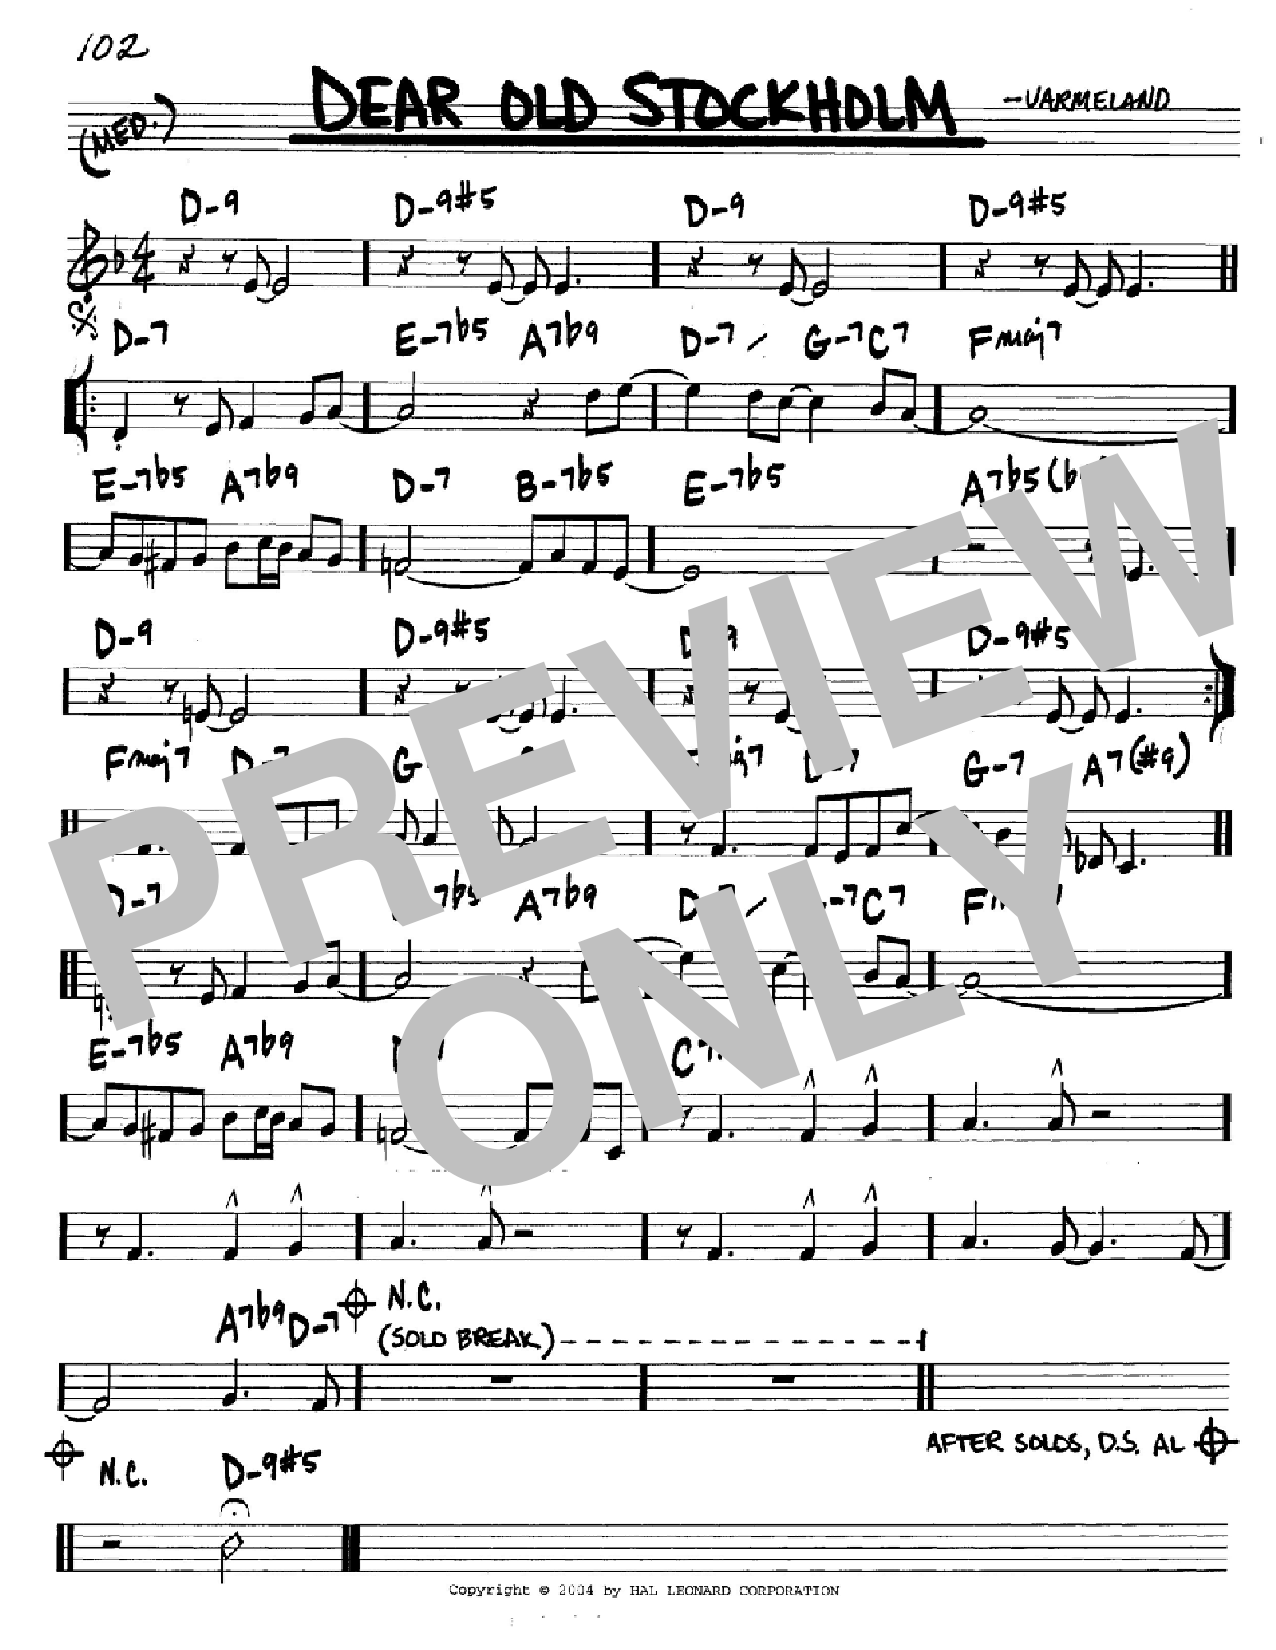 Varmeland Dear Old Stockholm Sheet Music Notes & Chords for Real Book - Melody & Chords - C Instruments - Download or Print PDF